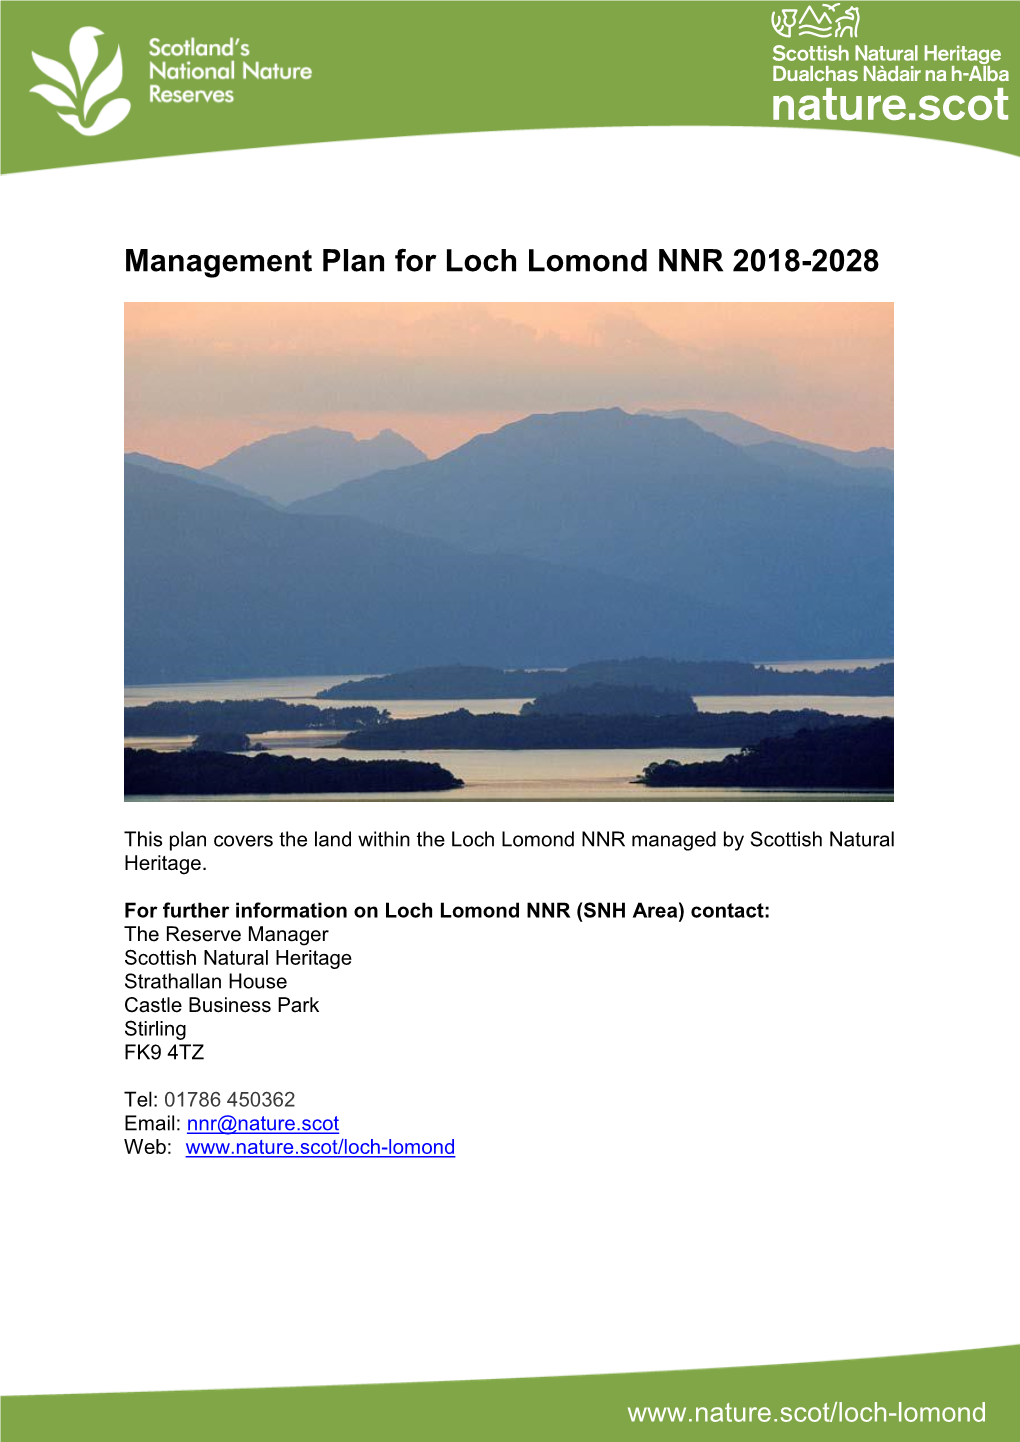 Loch Lomond NNR Management Plan